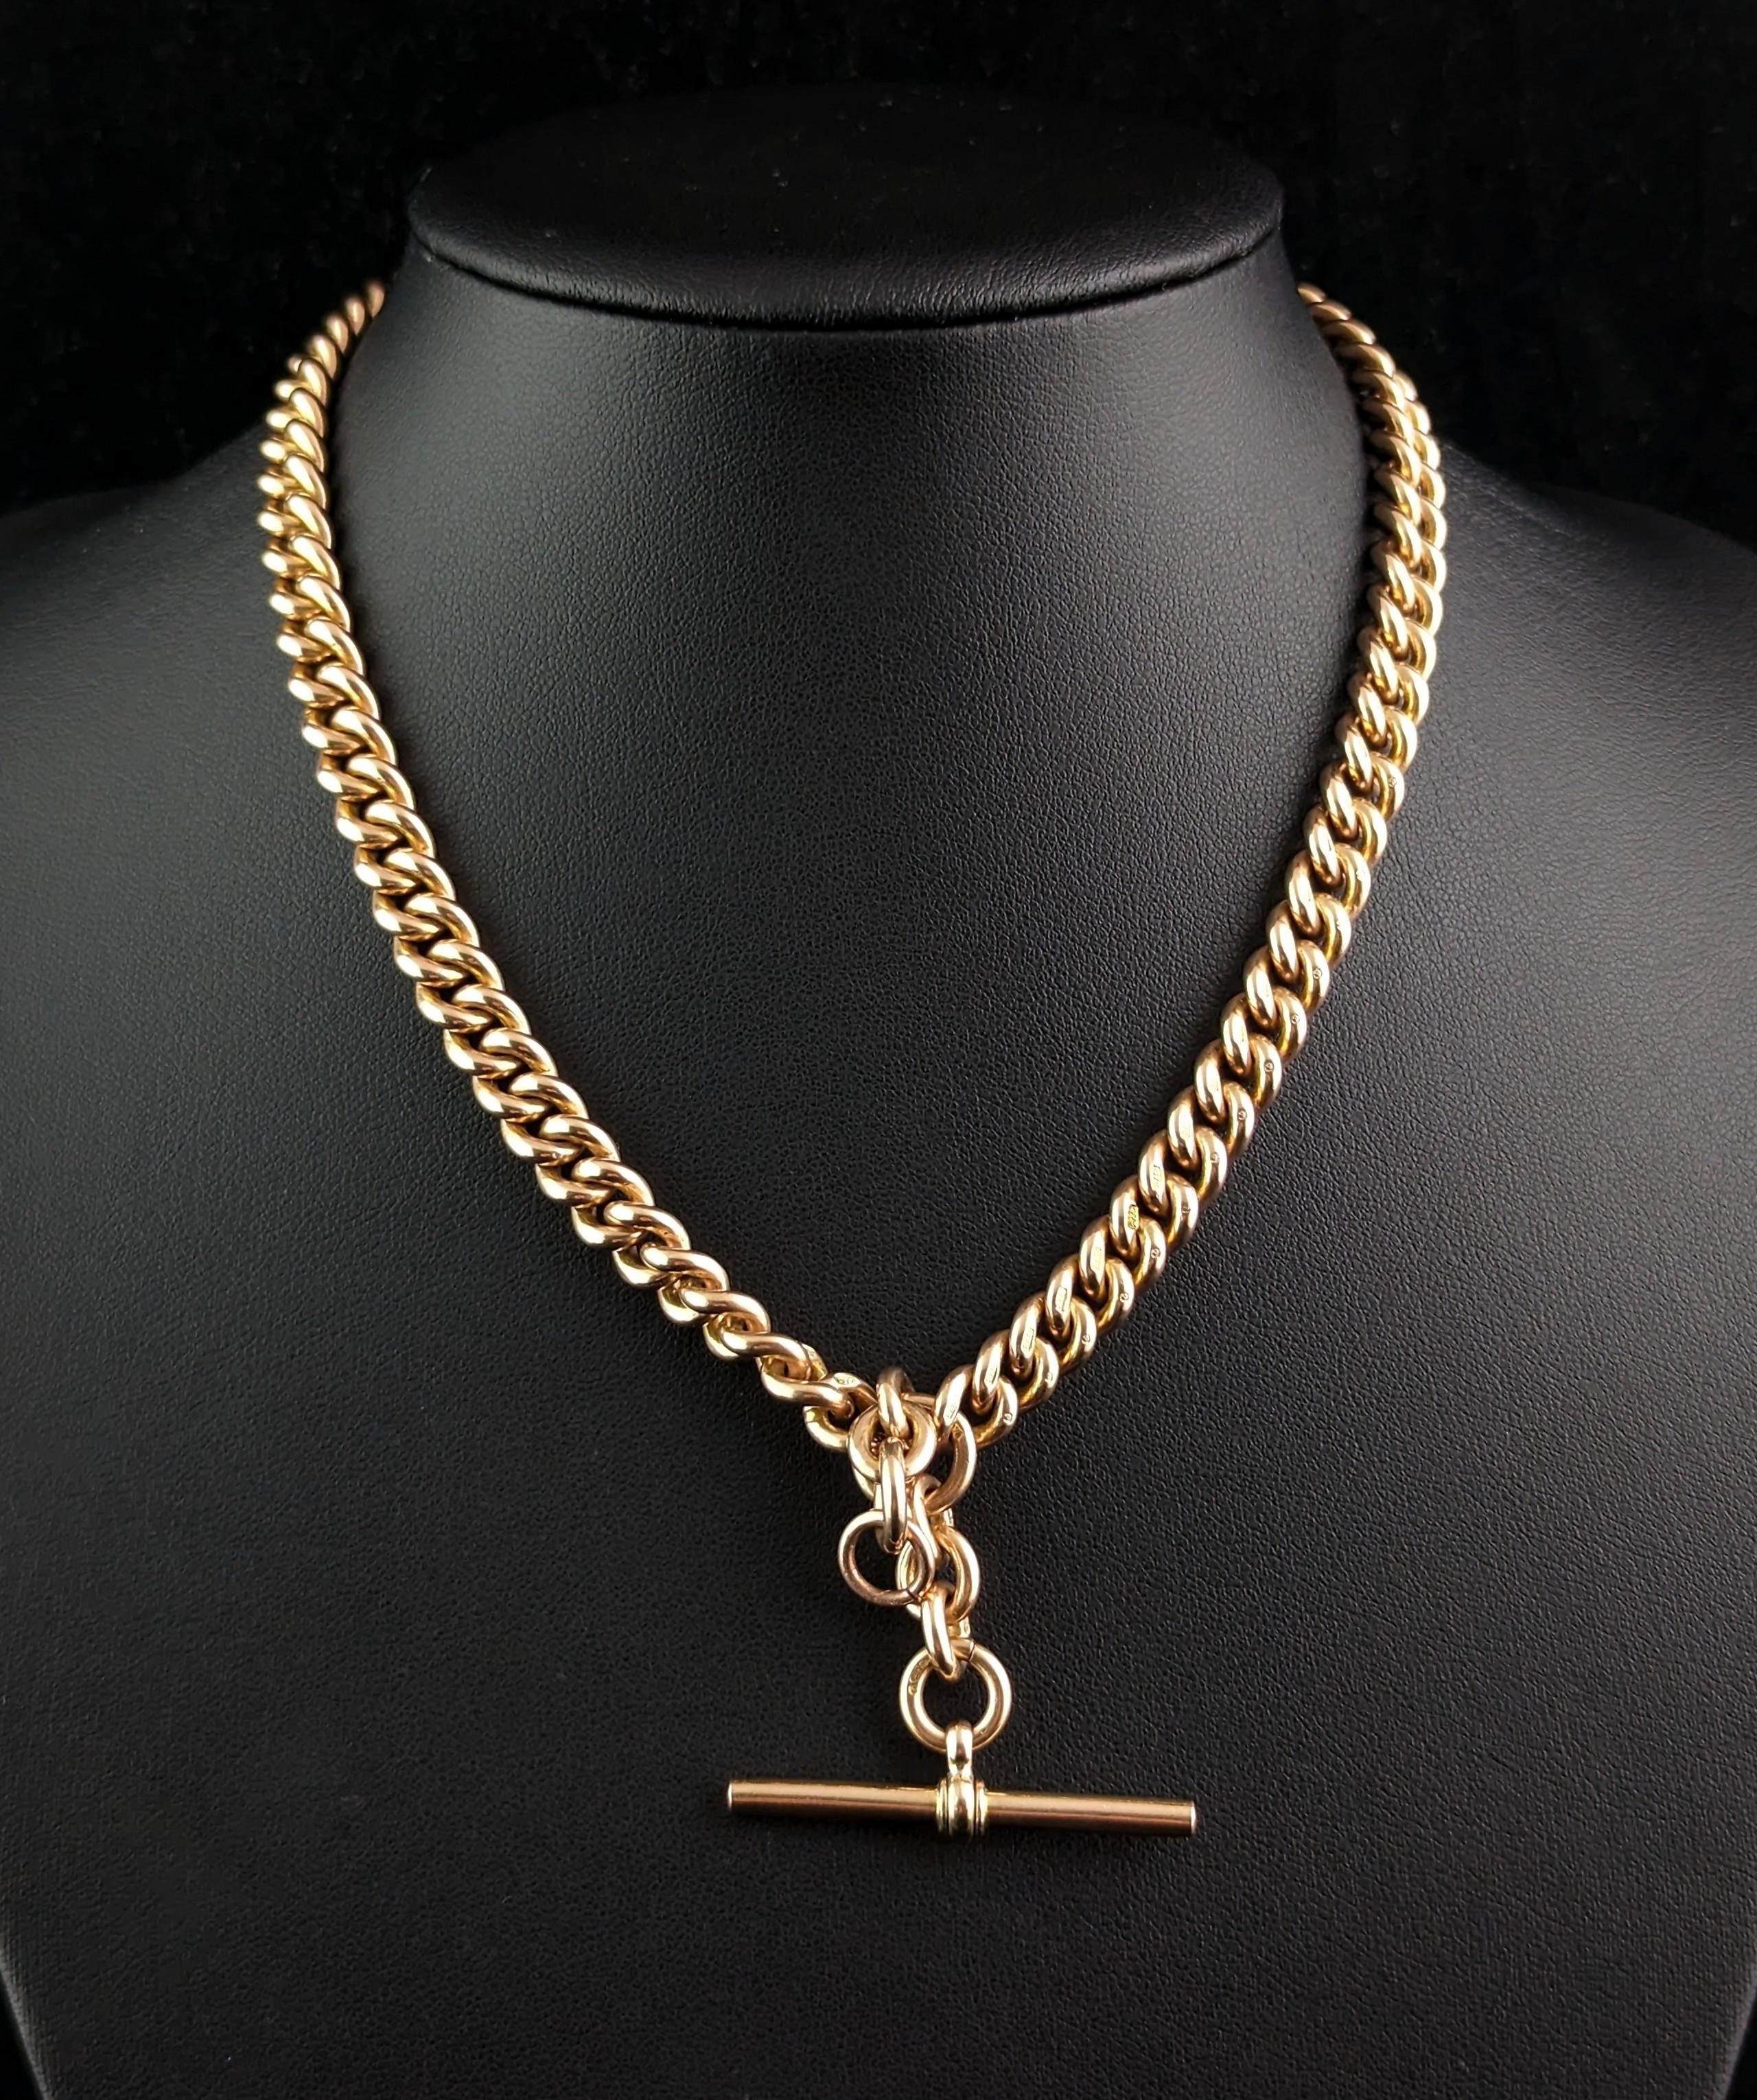 Edwardian Antique 9k gold Albert chain necklace, watch chain, Heavy 